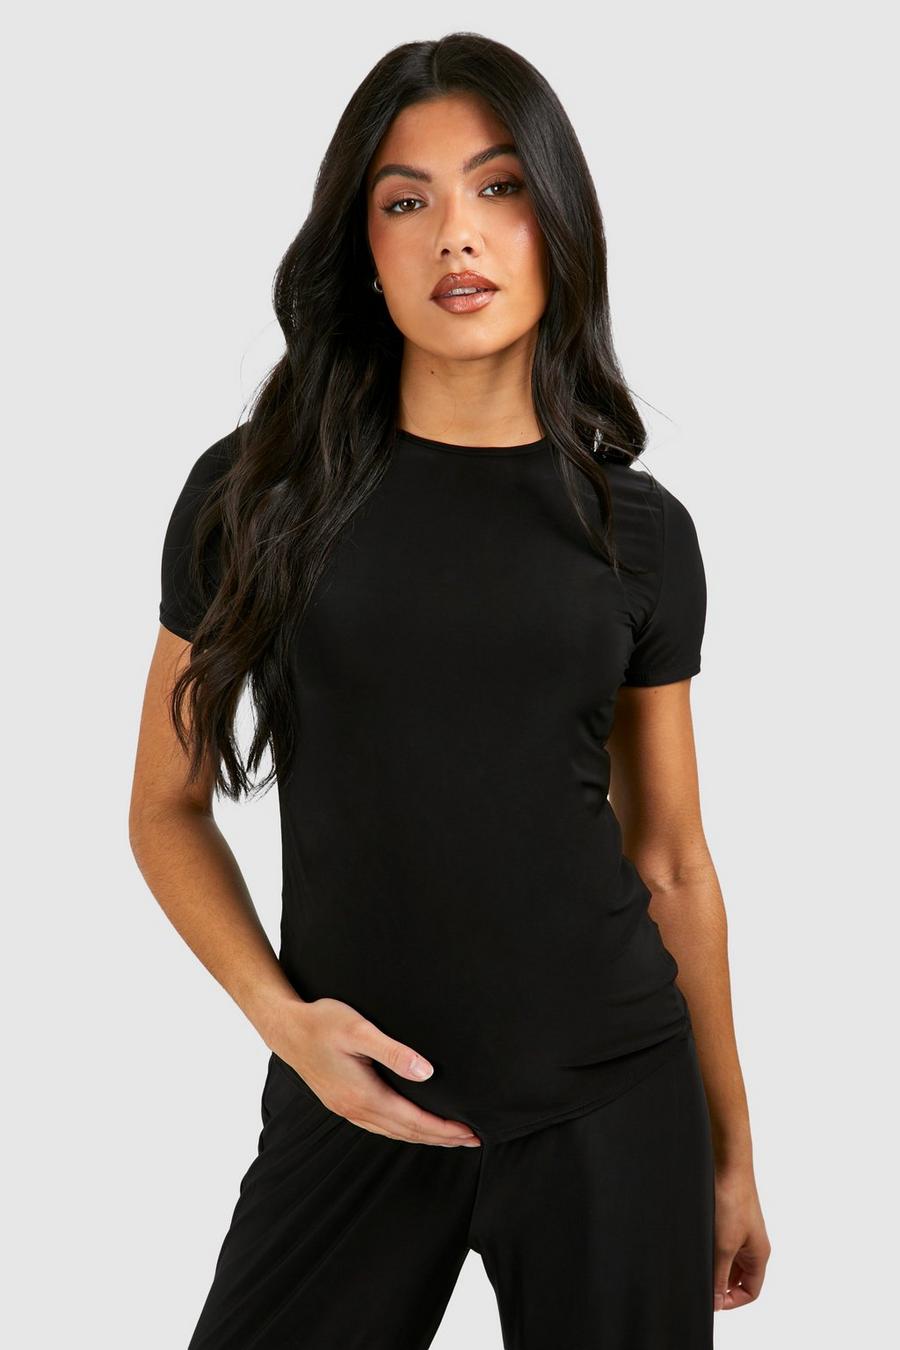 Big Boobs Funny Black Maternity Soft Long Sleeve T-Shirt - 2X-Large